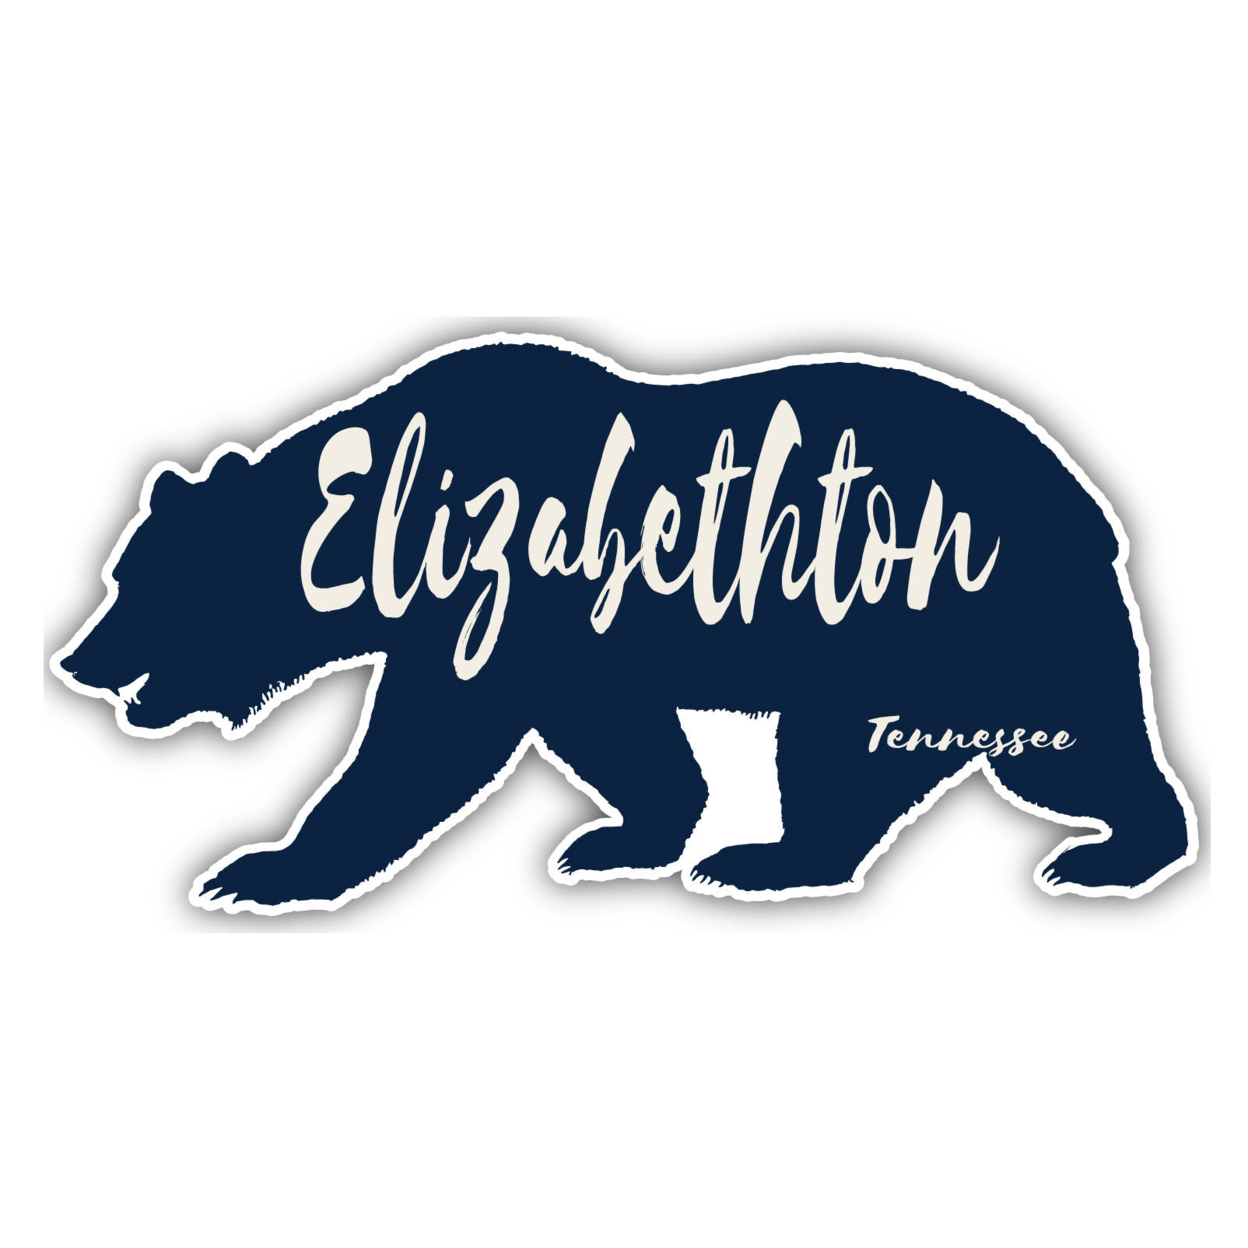 Elizabethton Tennessee Souvenir Decorative Stickers (Choose Theme And Size) - Single Unit, 4-Inch, Tent